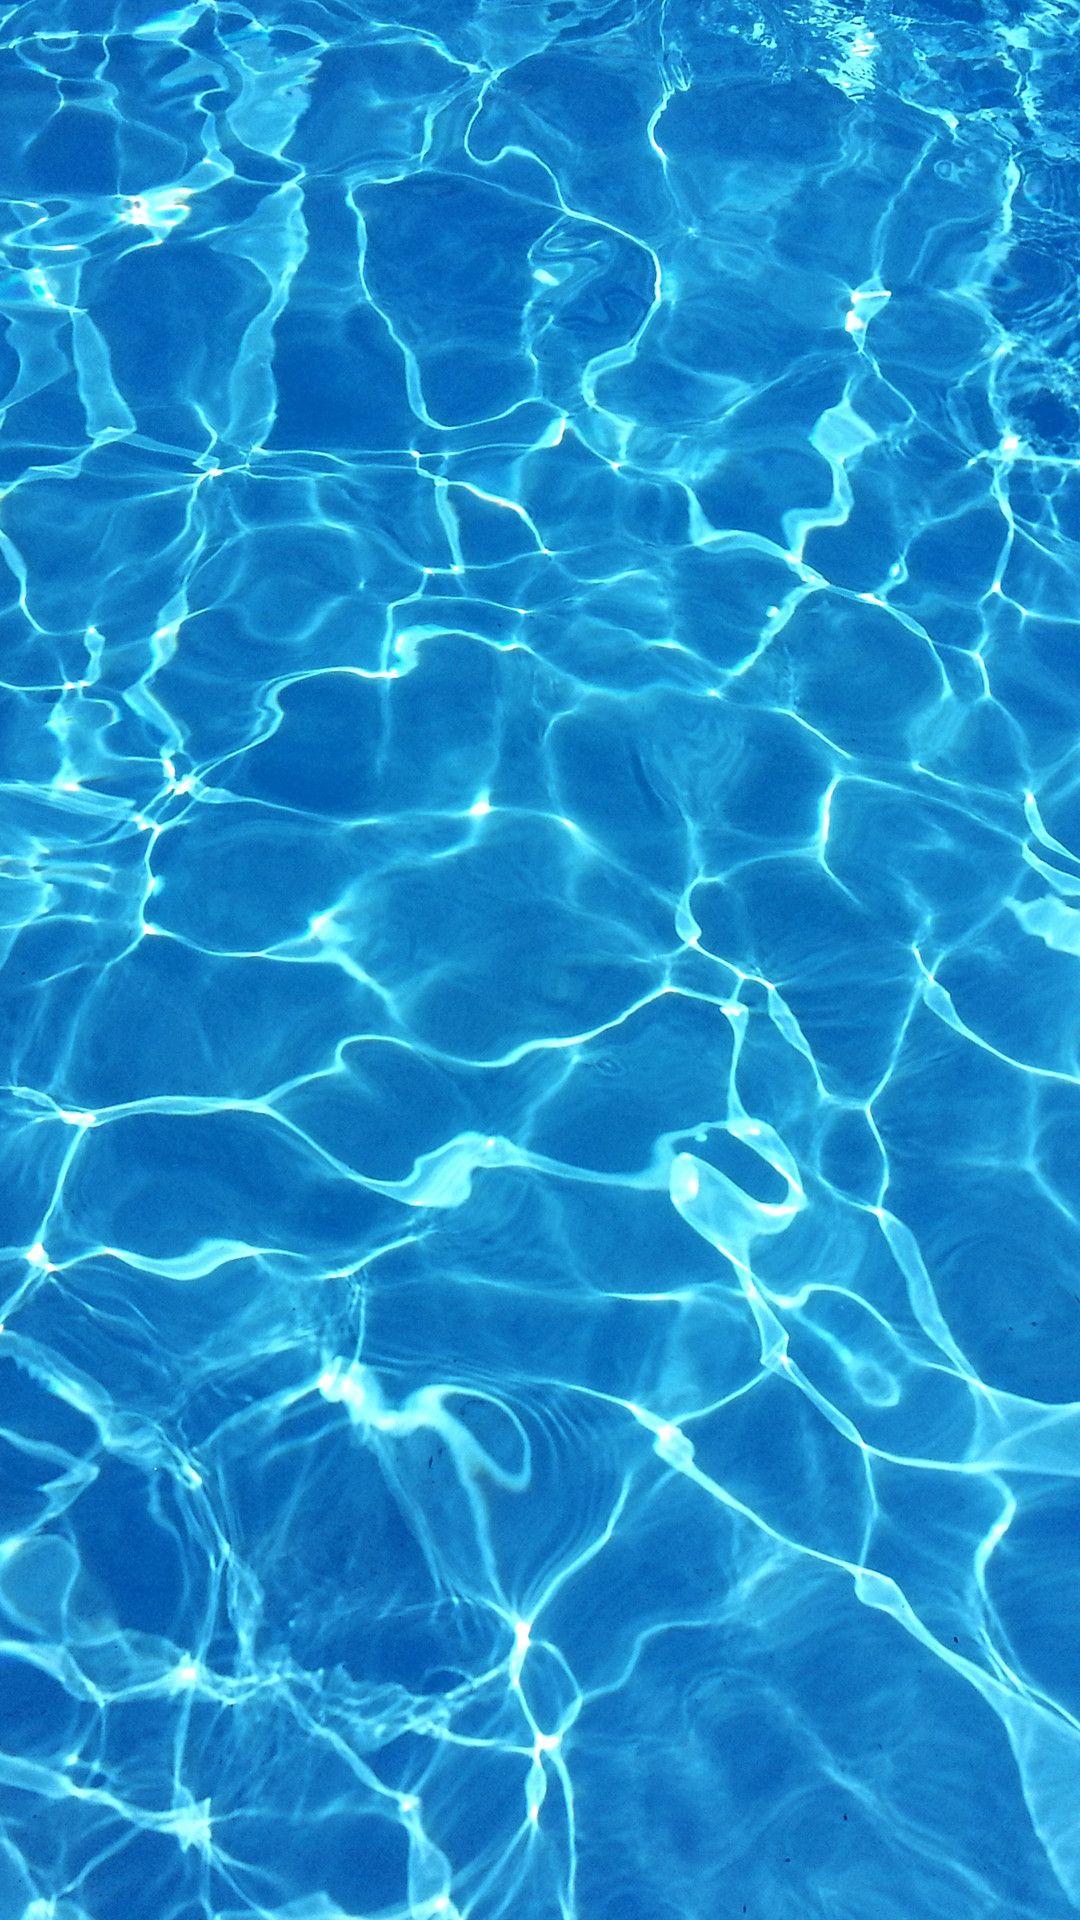 2000 Free Swimming Pool  Pool Images  Pixabay